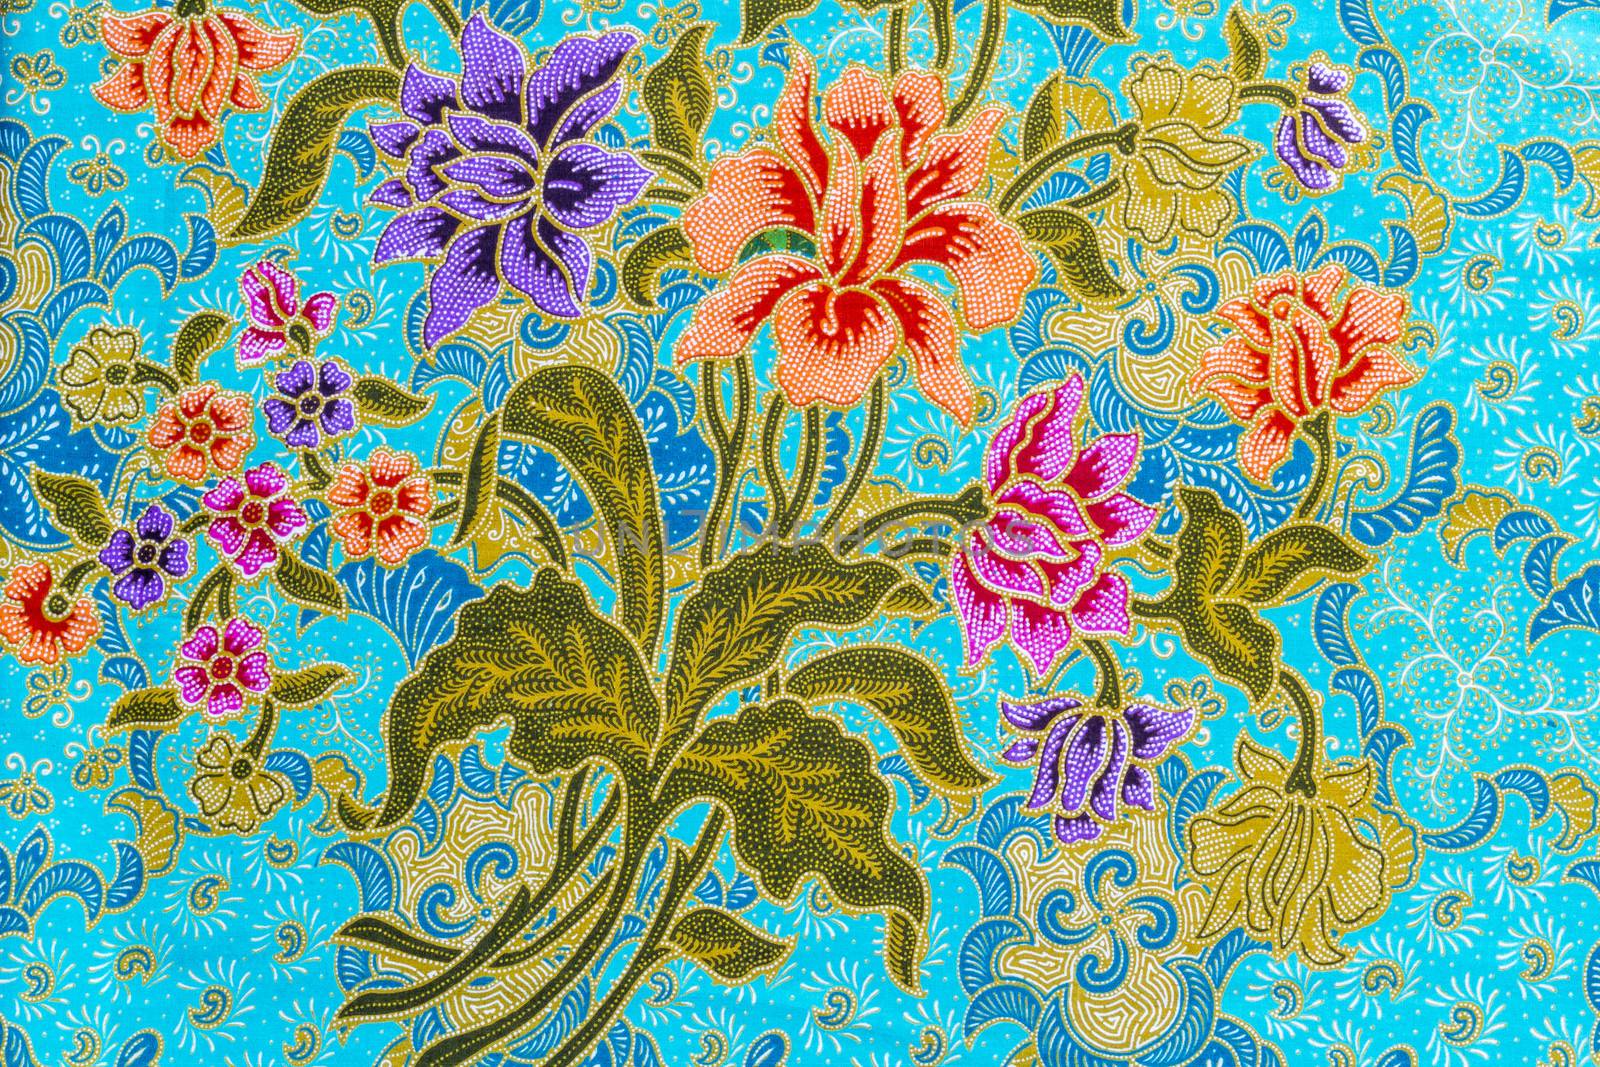 Beautiful colorful flowers pattern on batik background